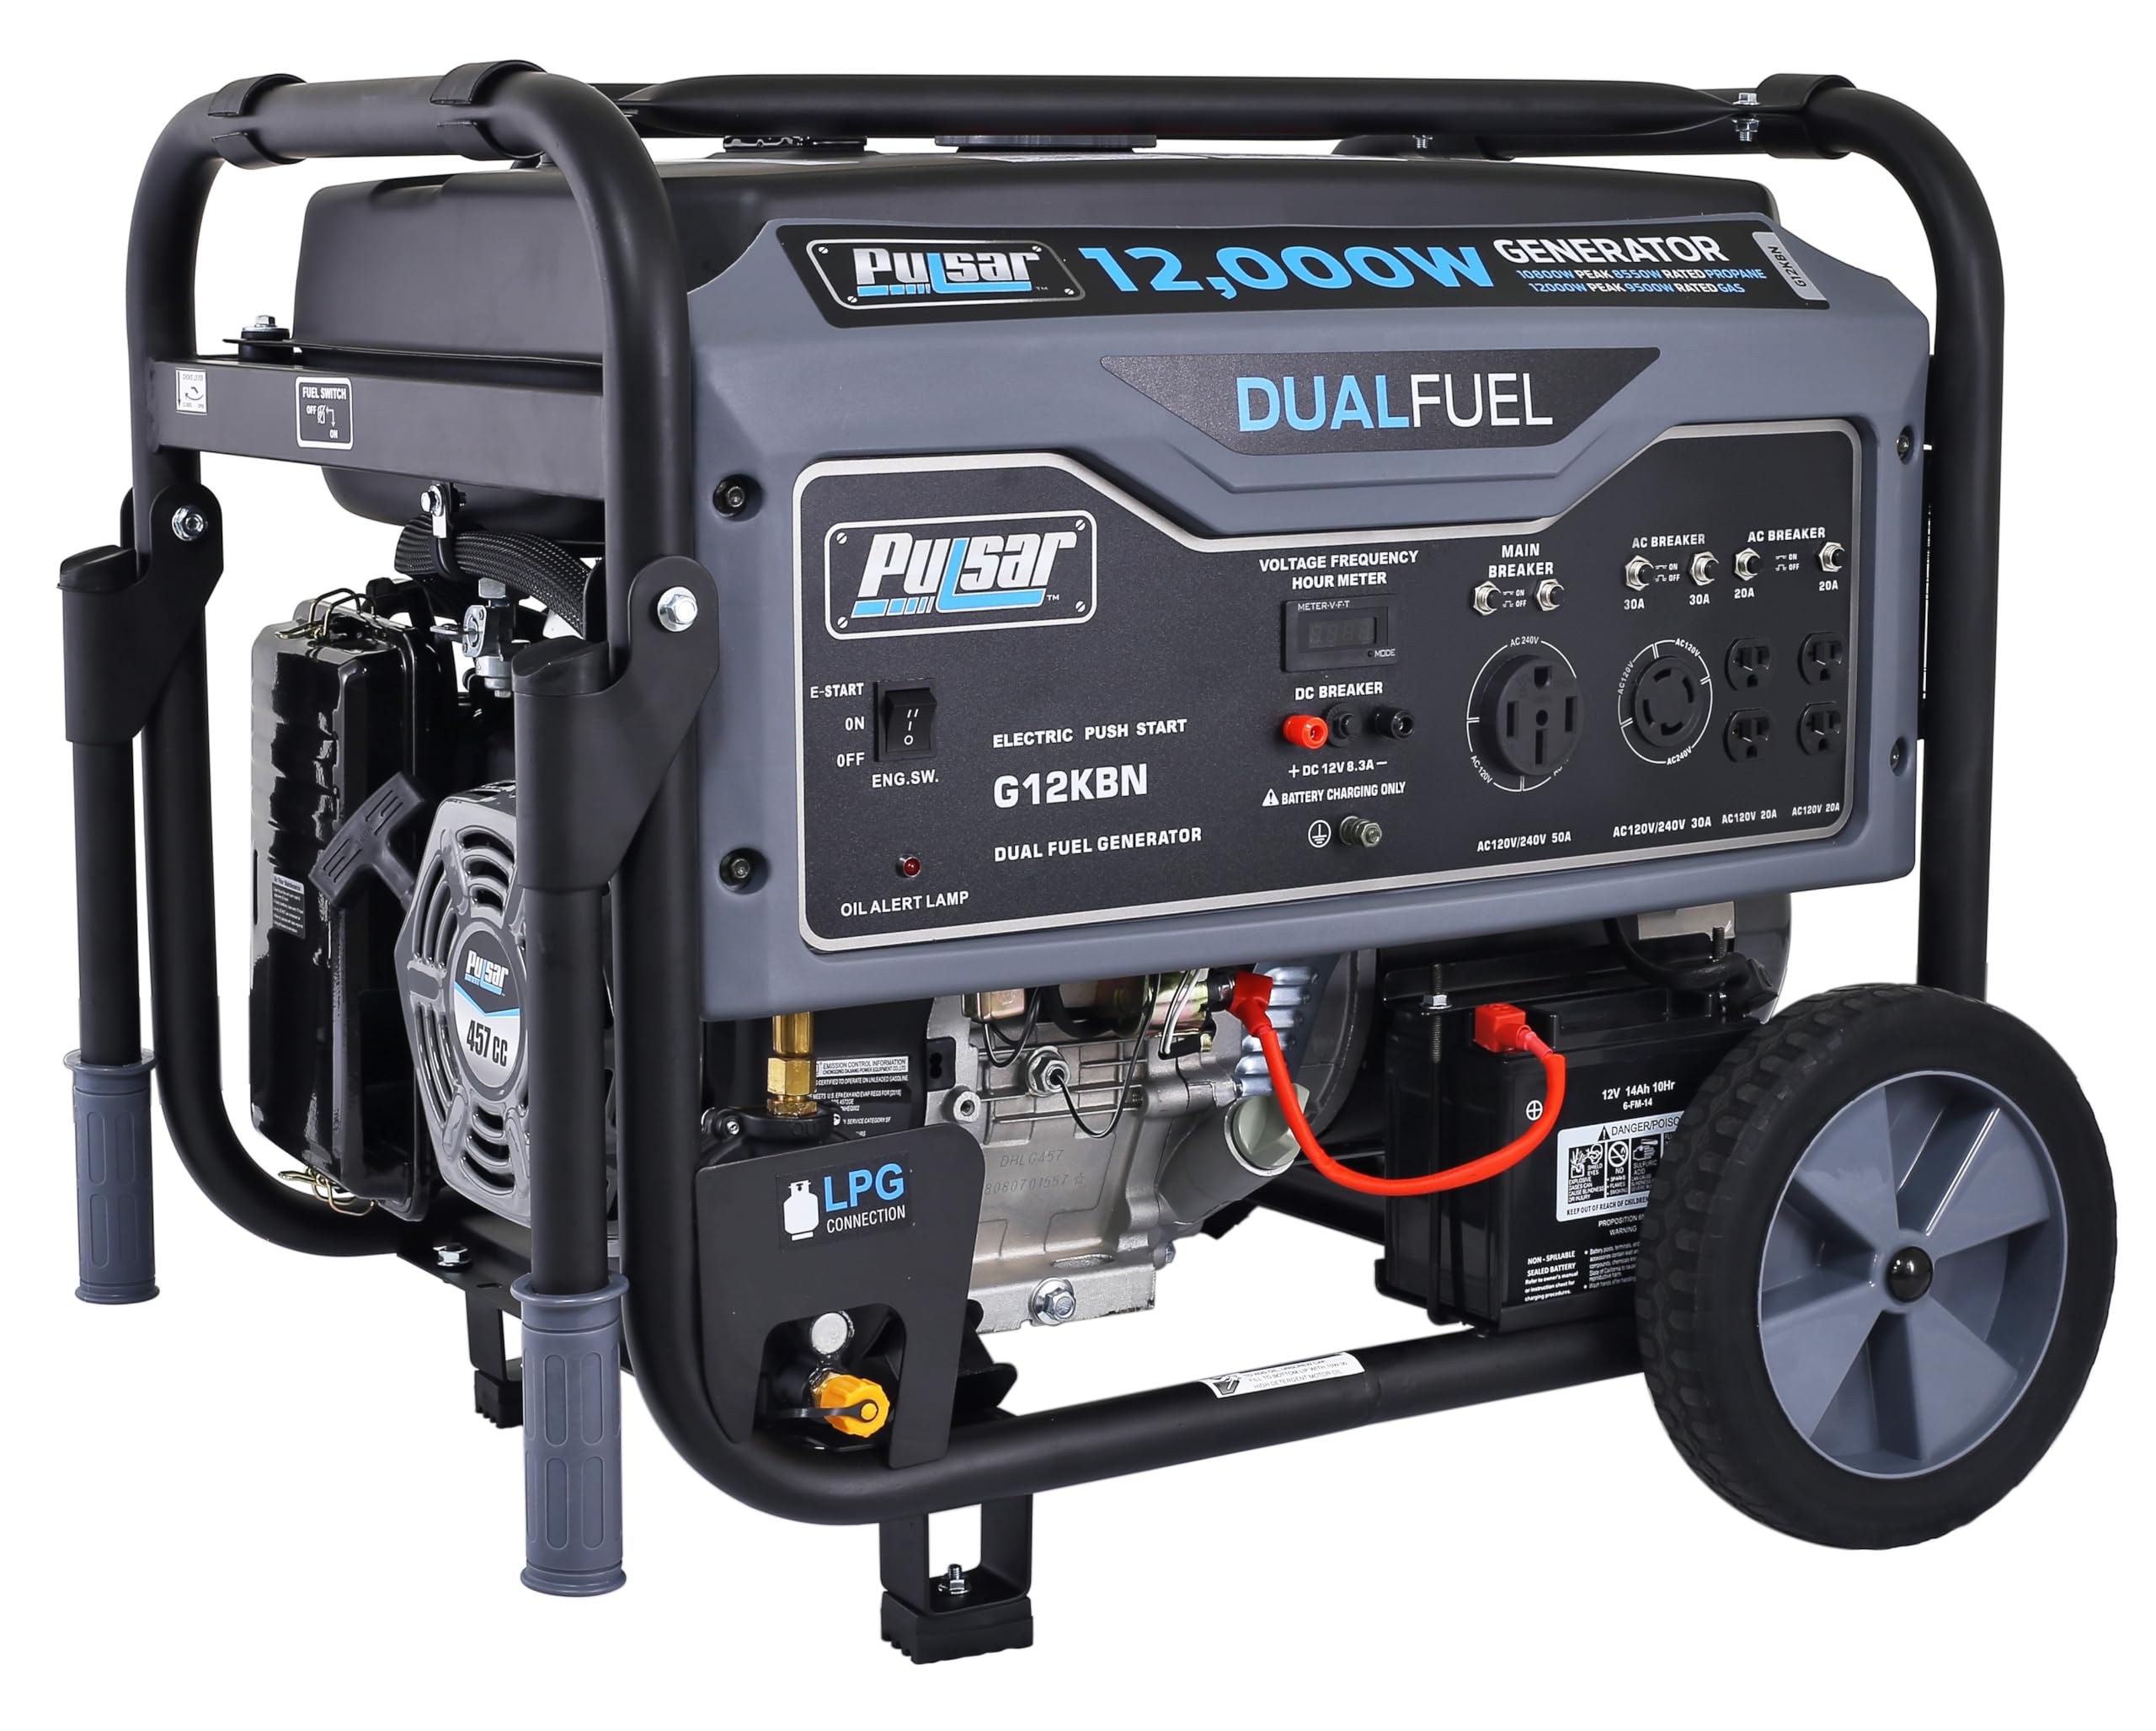 Pulsar G12KBN-SG Heavy Duty Portable Dual Fuel Generator - 9500 Rated Watts & 12000 Peak Watts - Gas & LPG - Electric Start - Transfer Switch & RV Ready - CARB Compliant